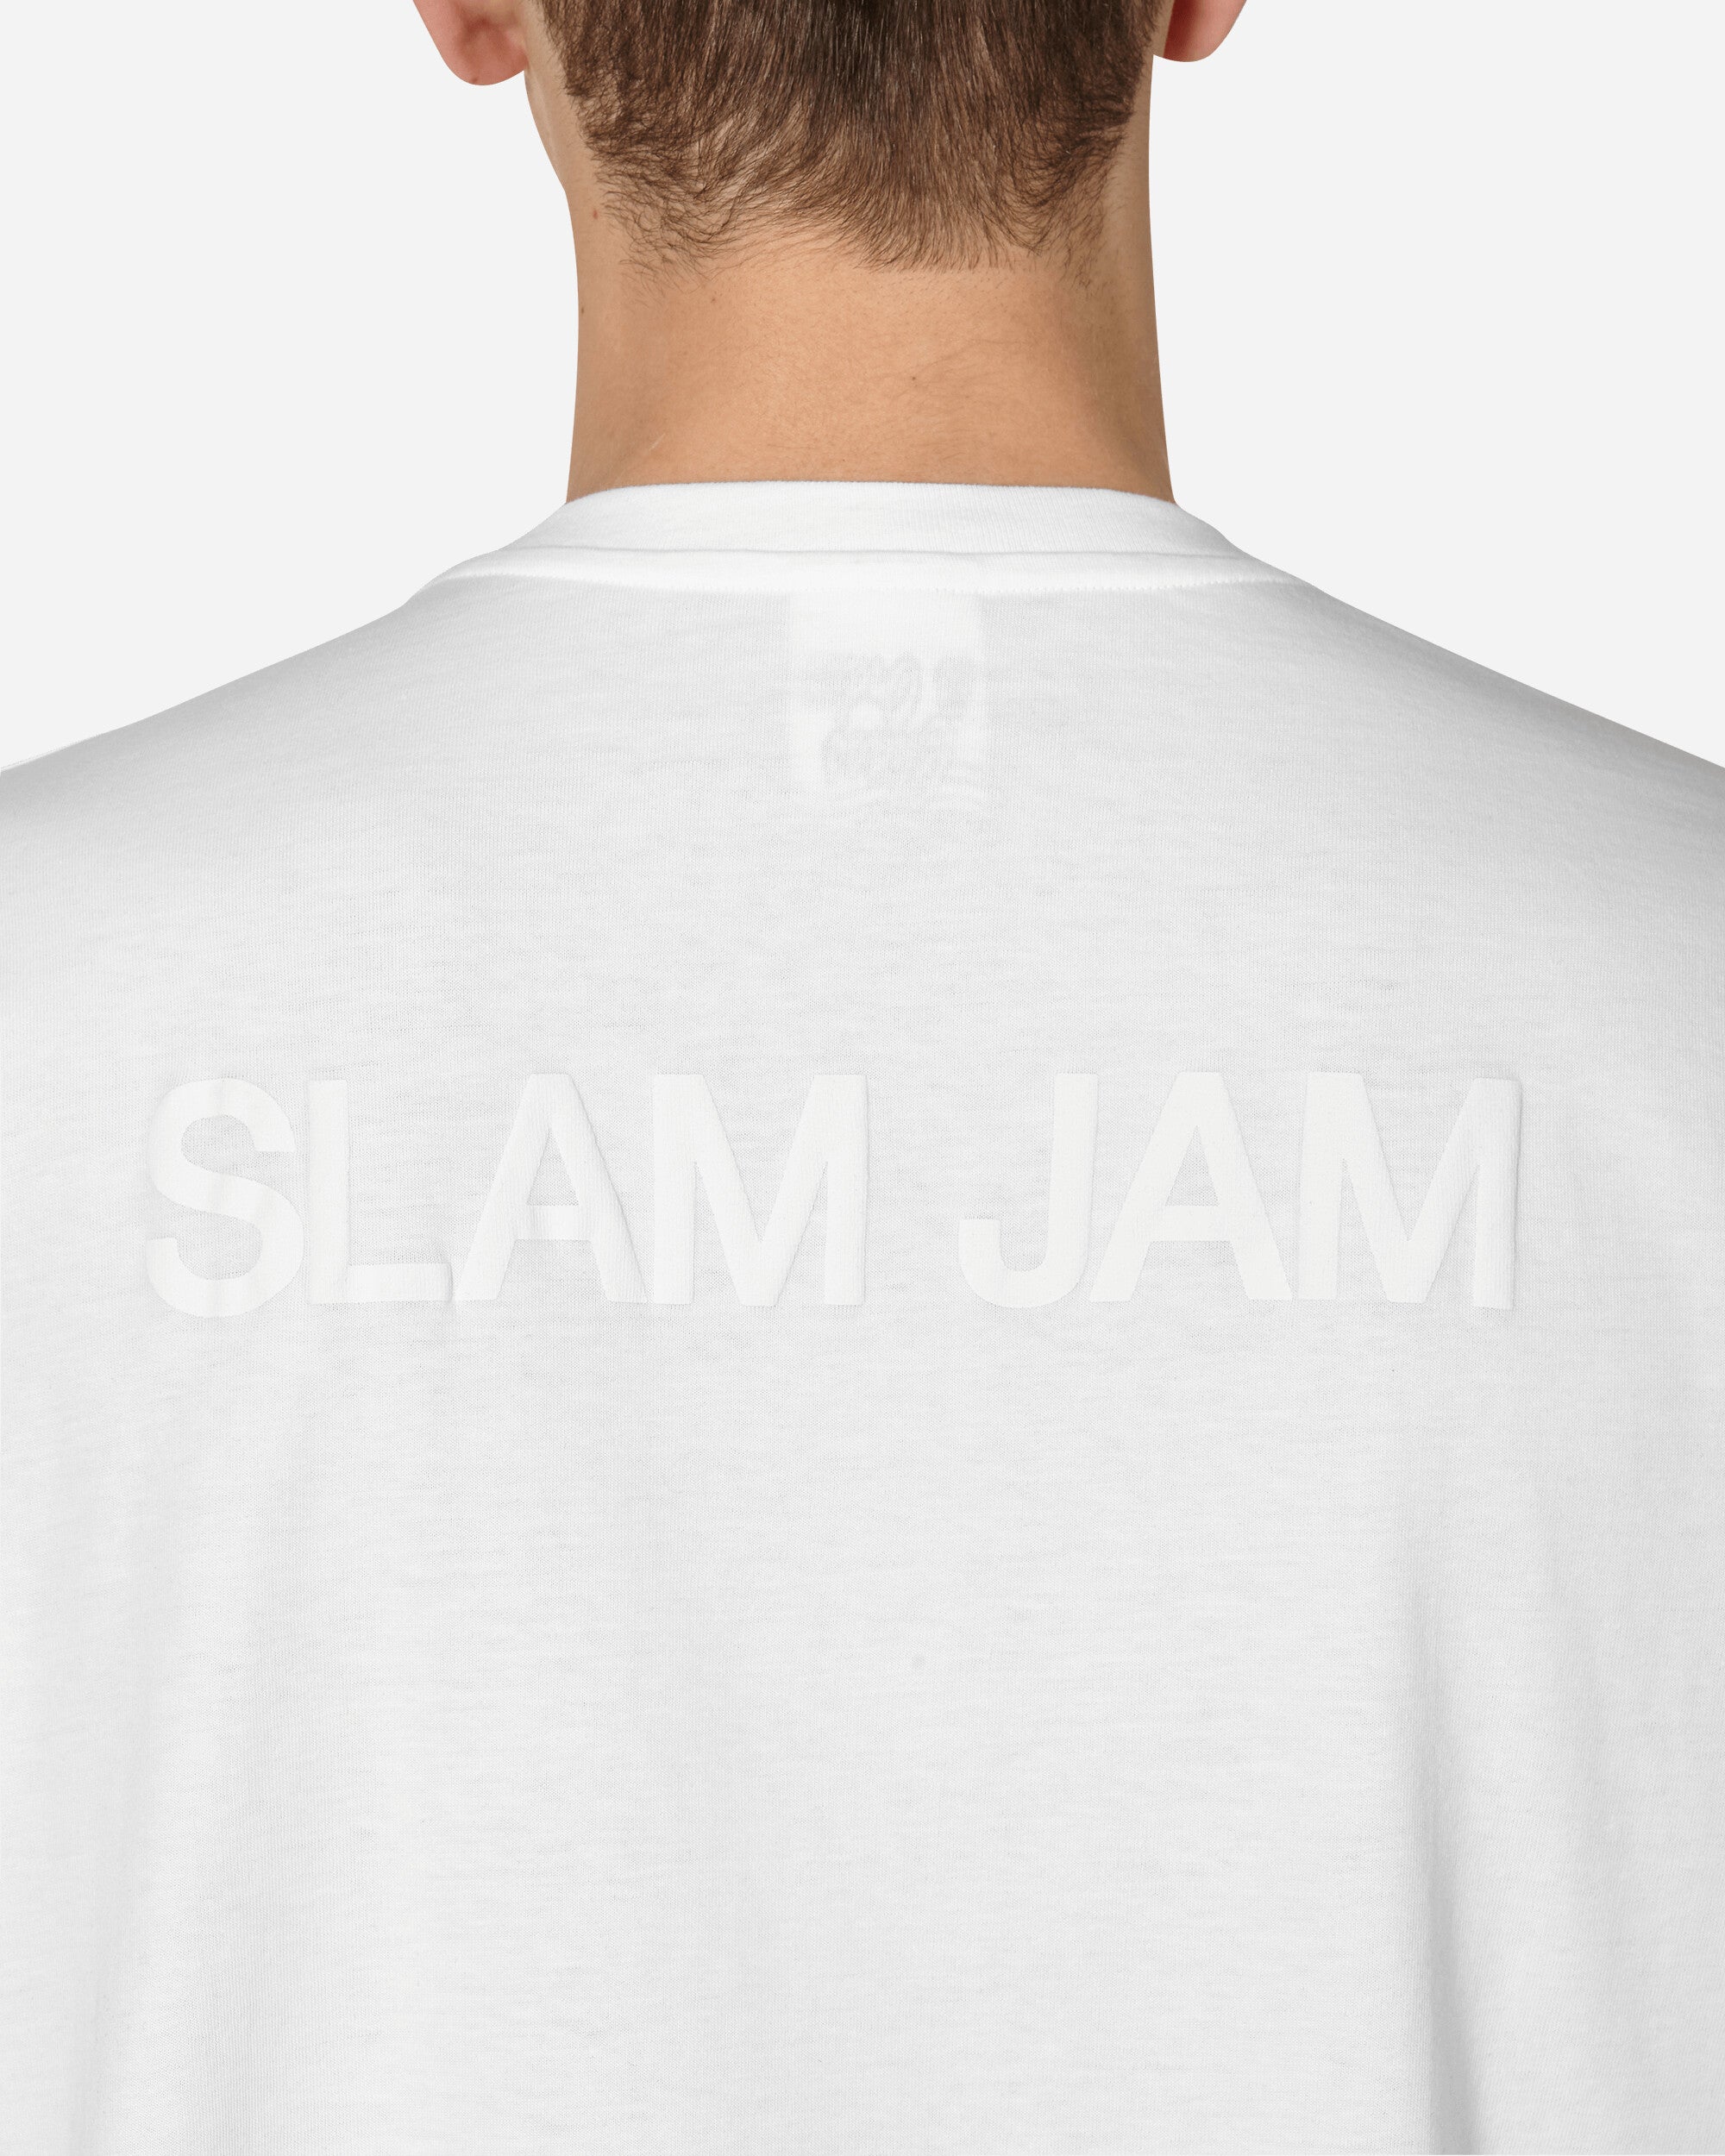 Slam Jam Graphic Ls Tee White Shirts Longsleeve SBMW007FA04 WTH0001